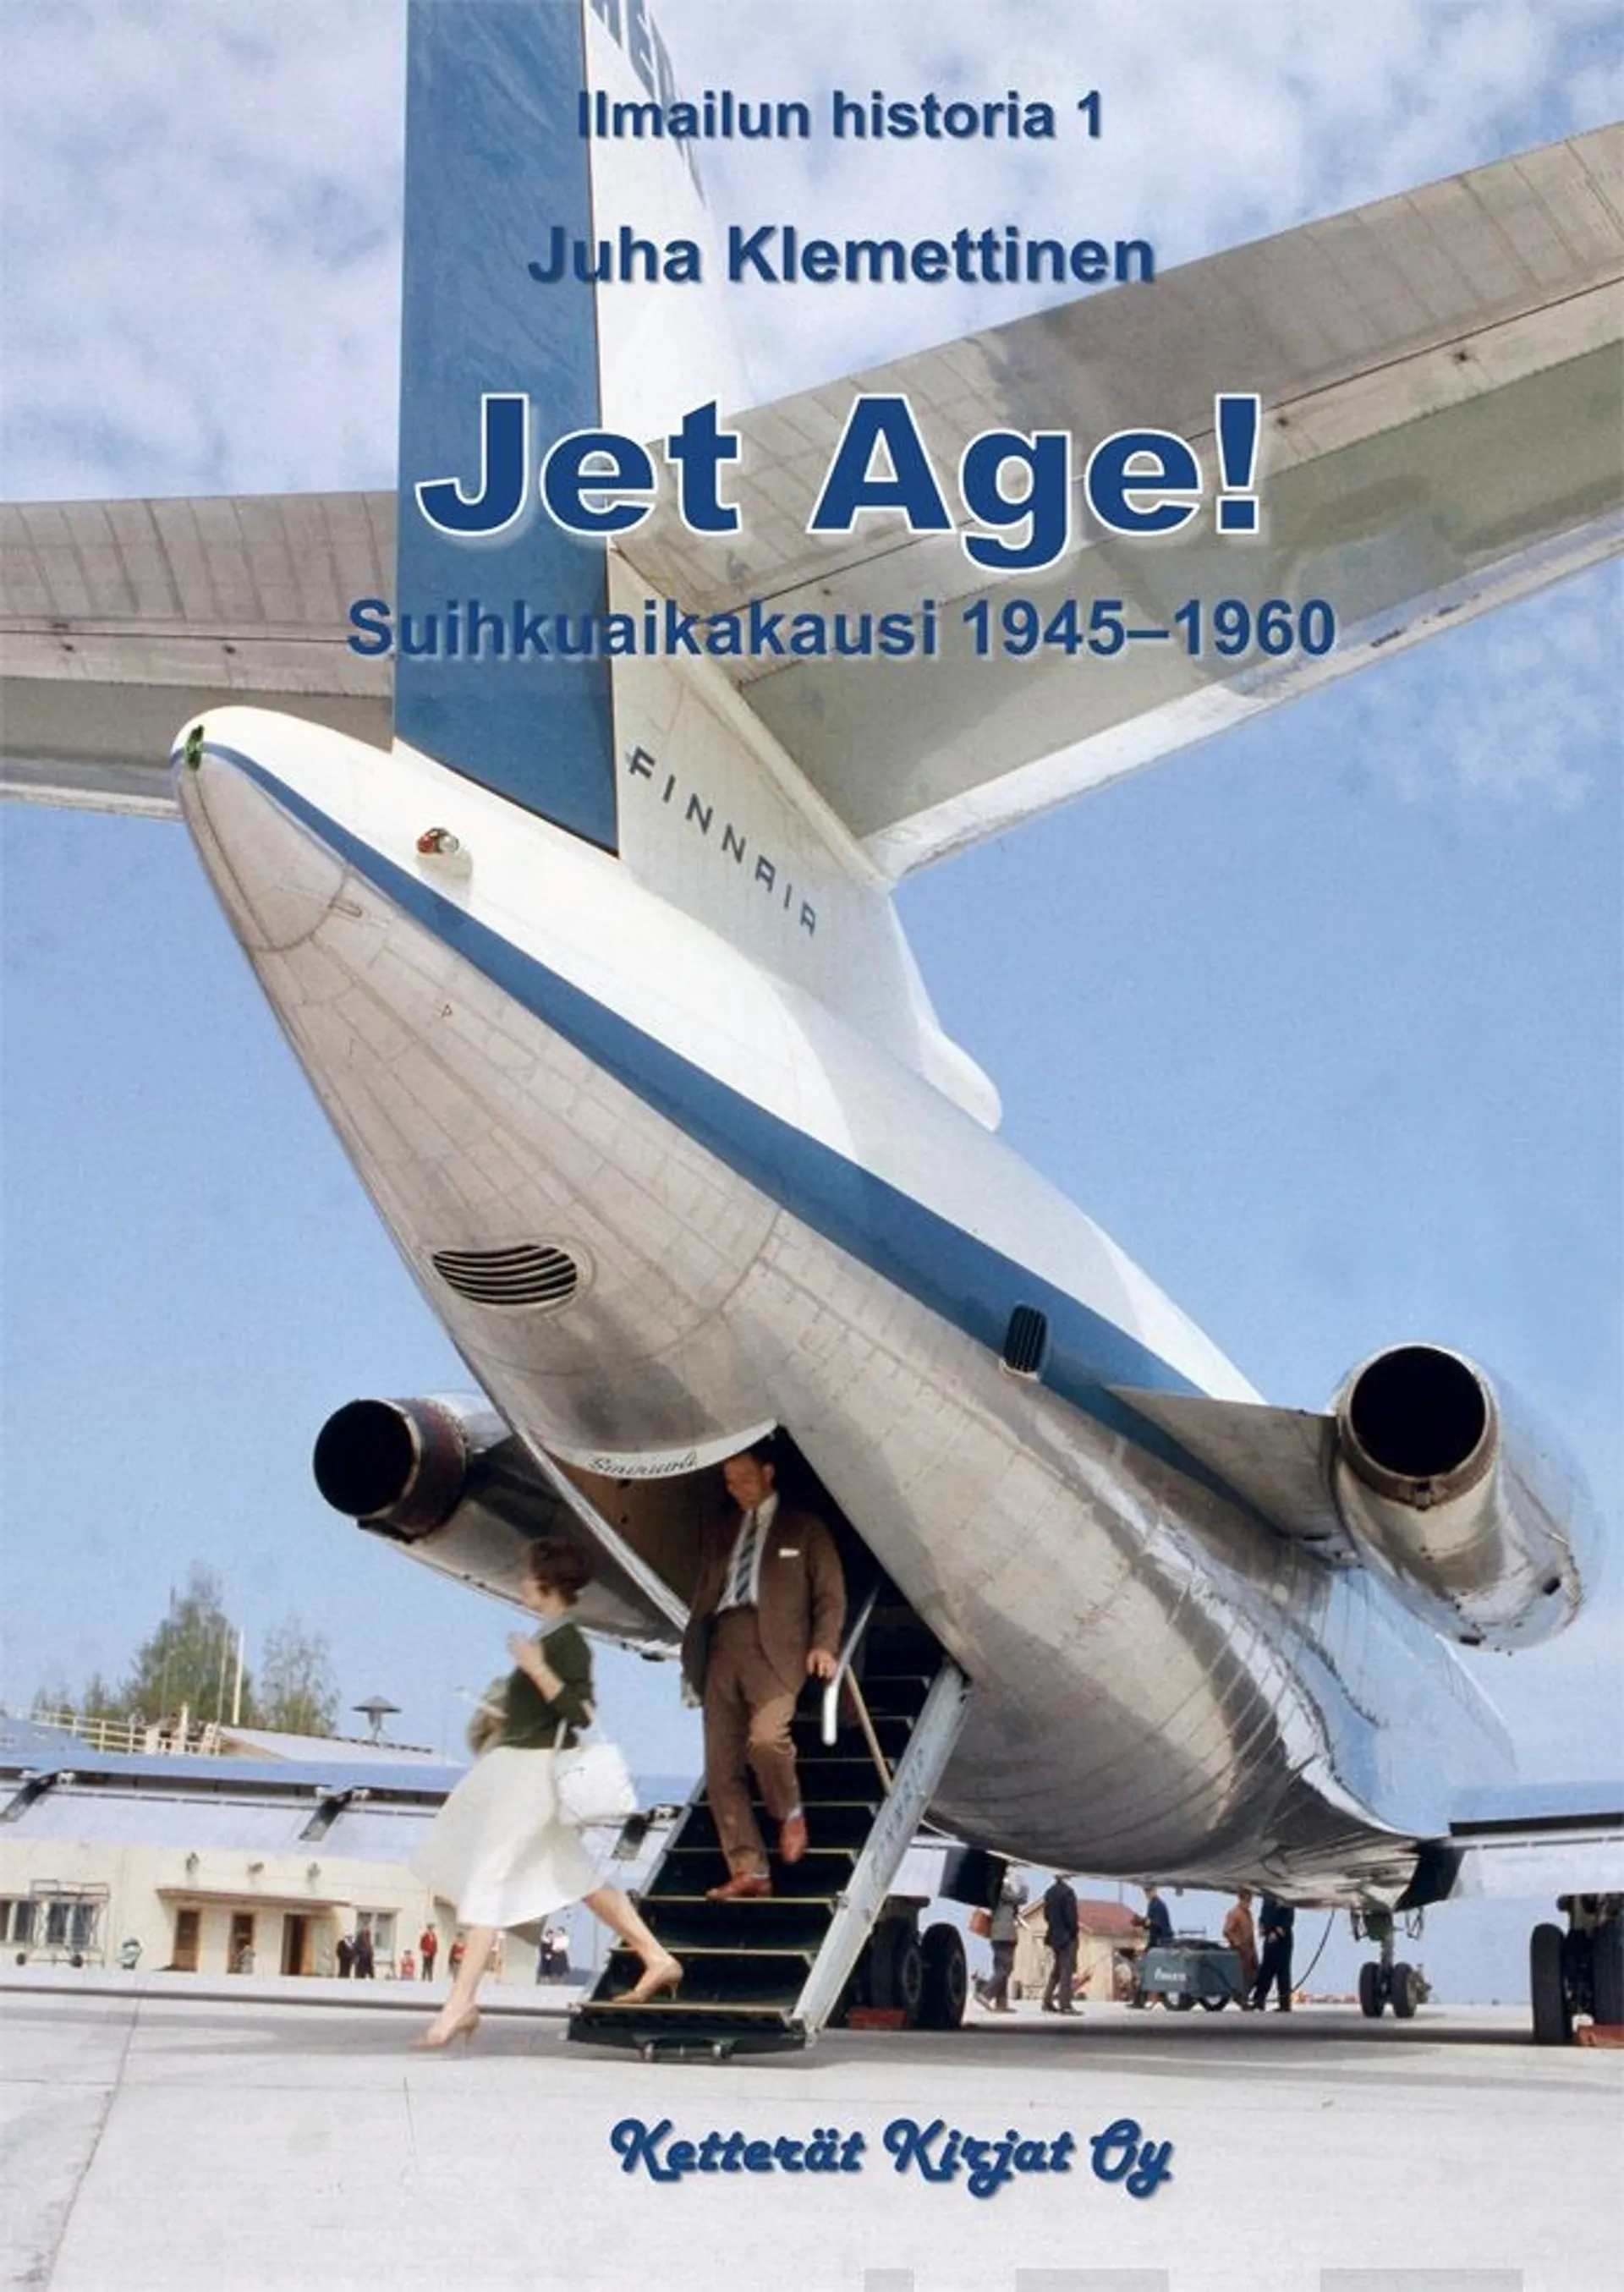 Klemettinen, Jet Age!